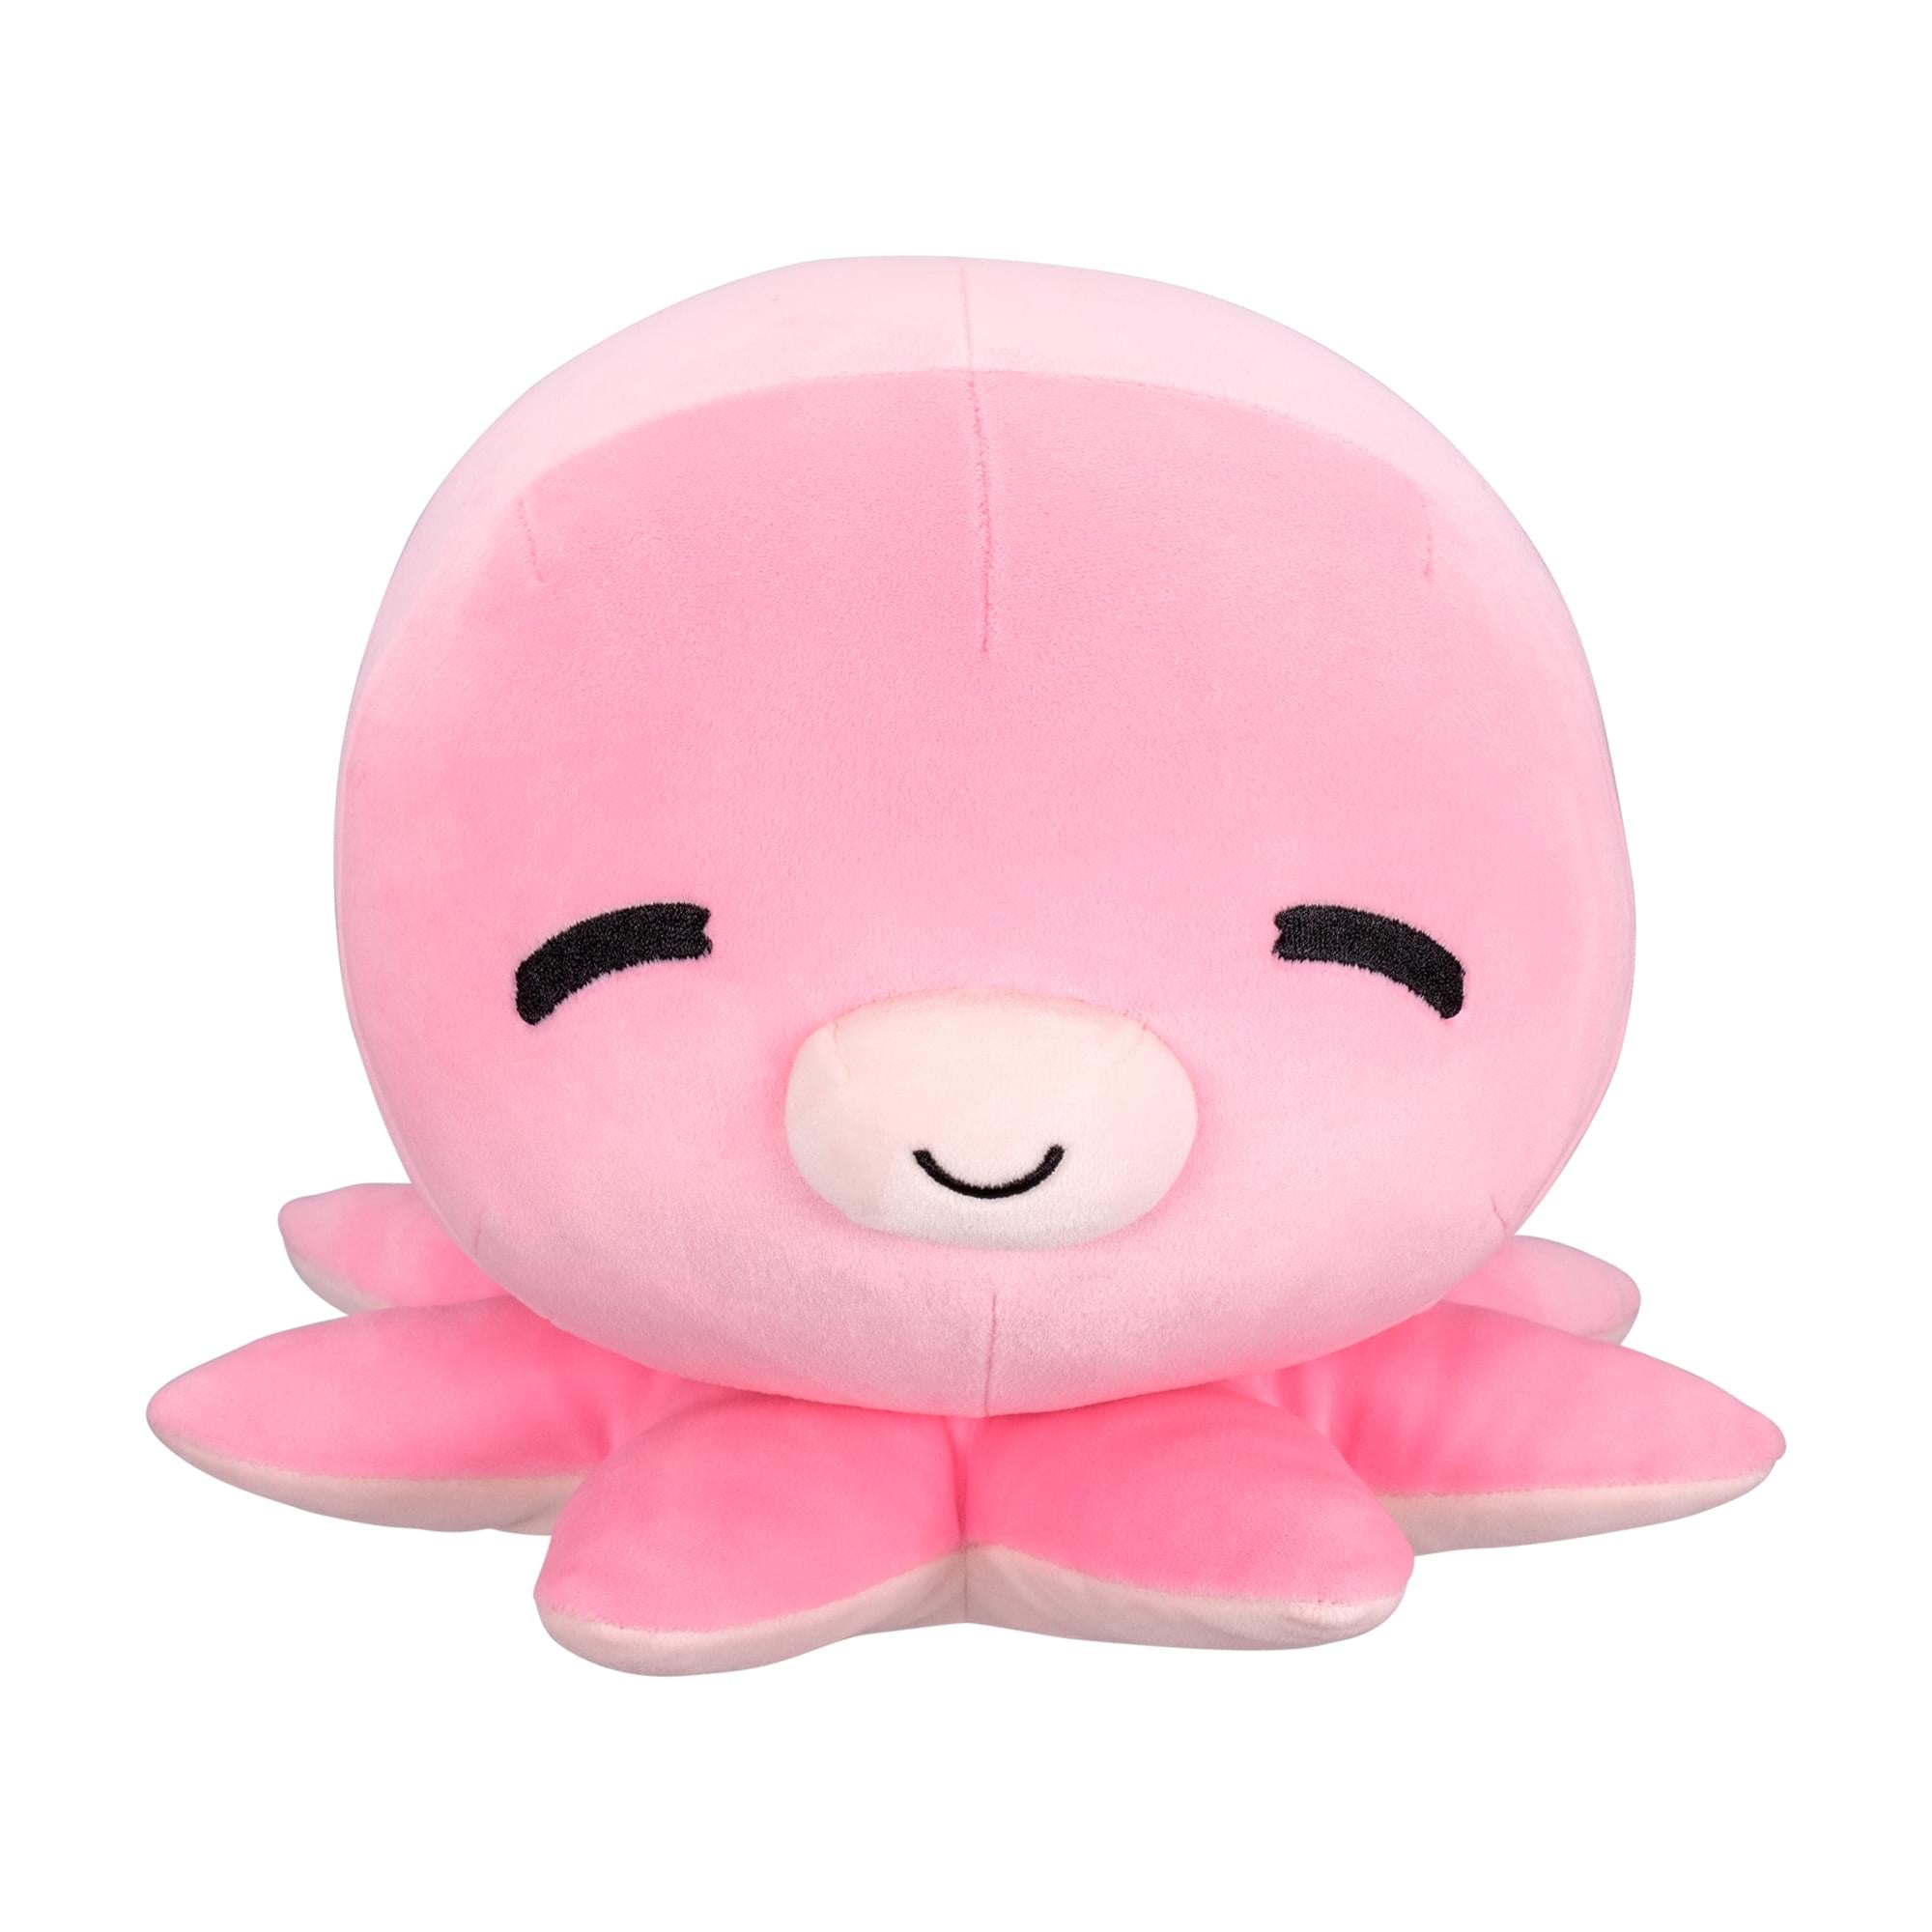 Photos - Soft Toy MochiOshis 12" Character Plush Toy Animal Pink Octopus | Izumi Inkyoshi TN